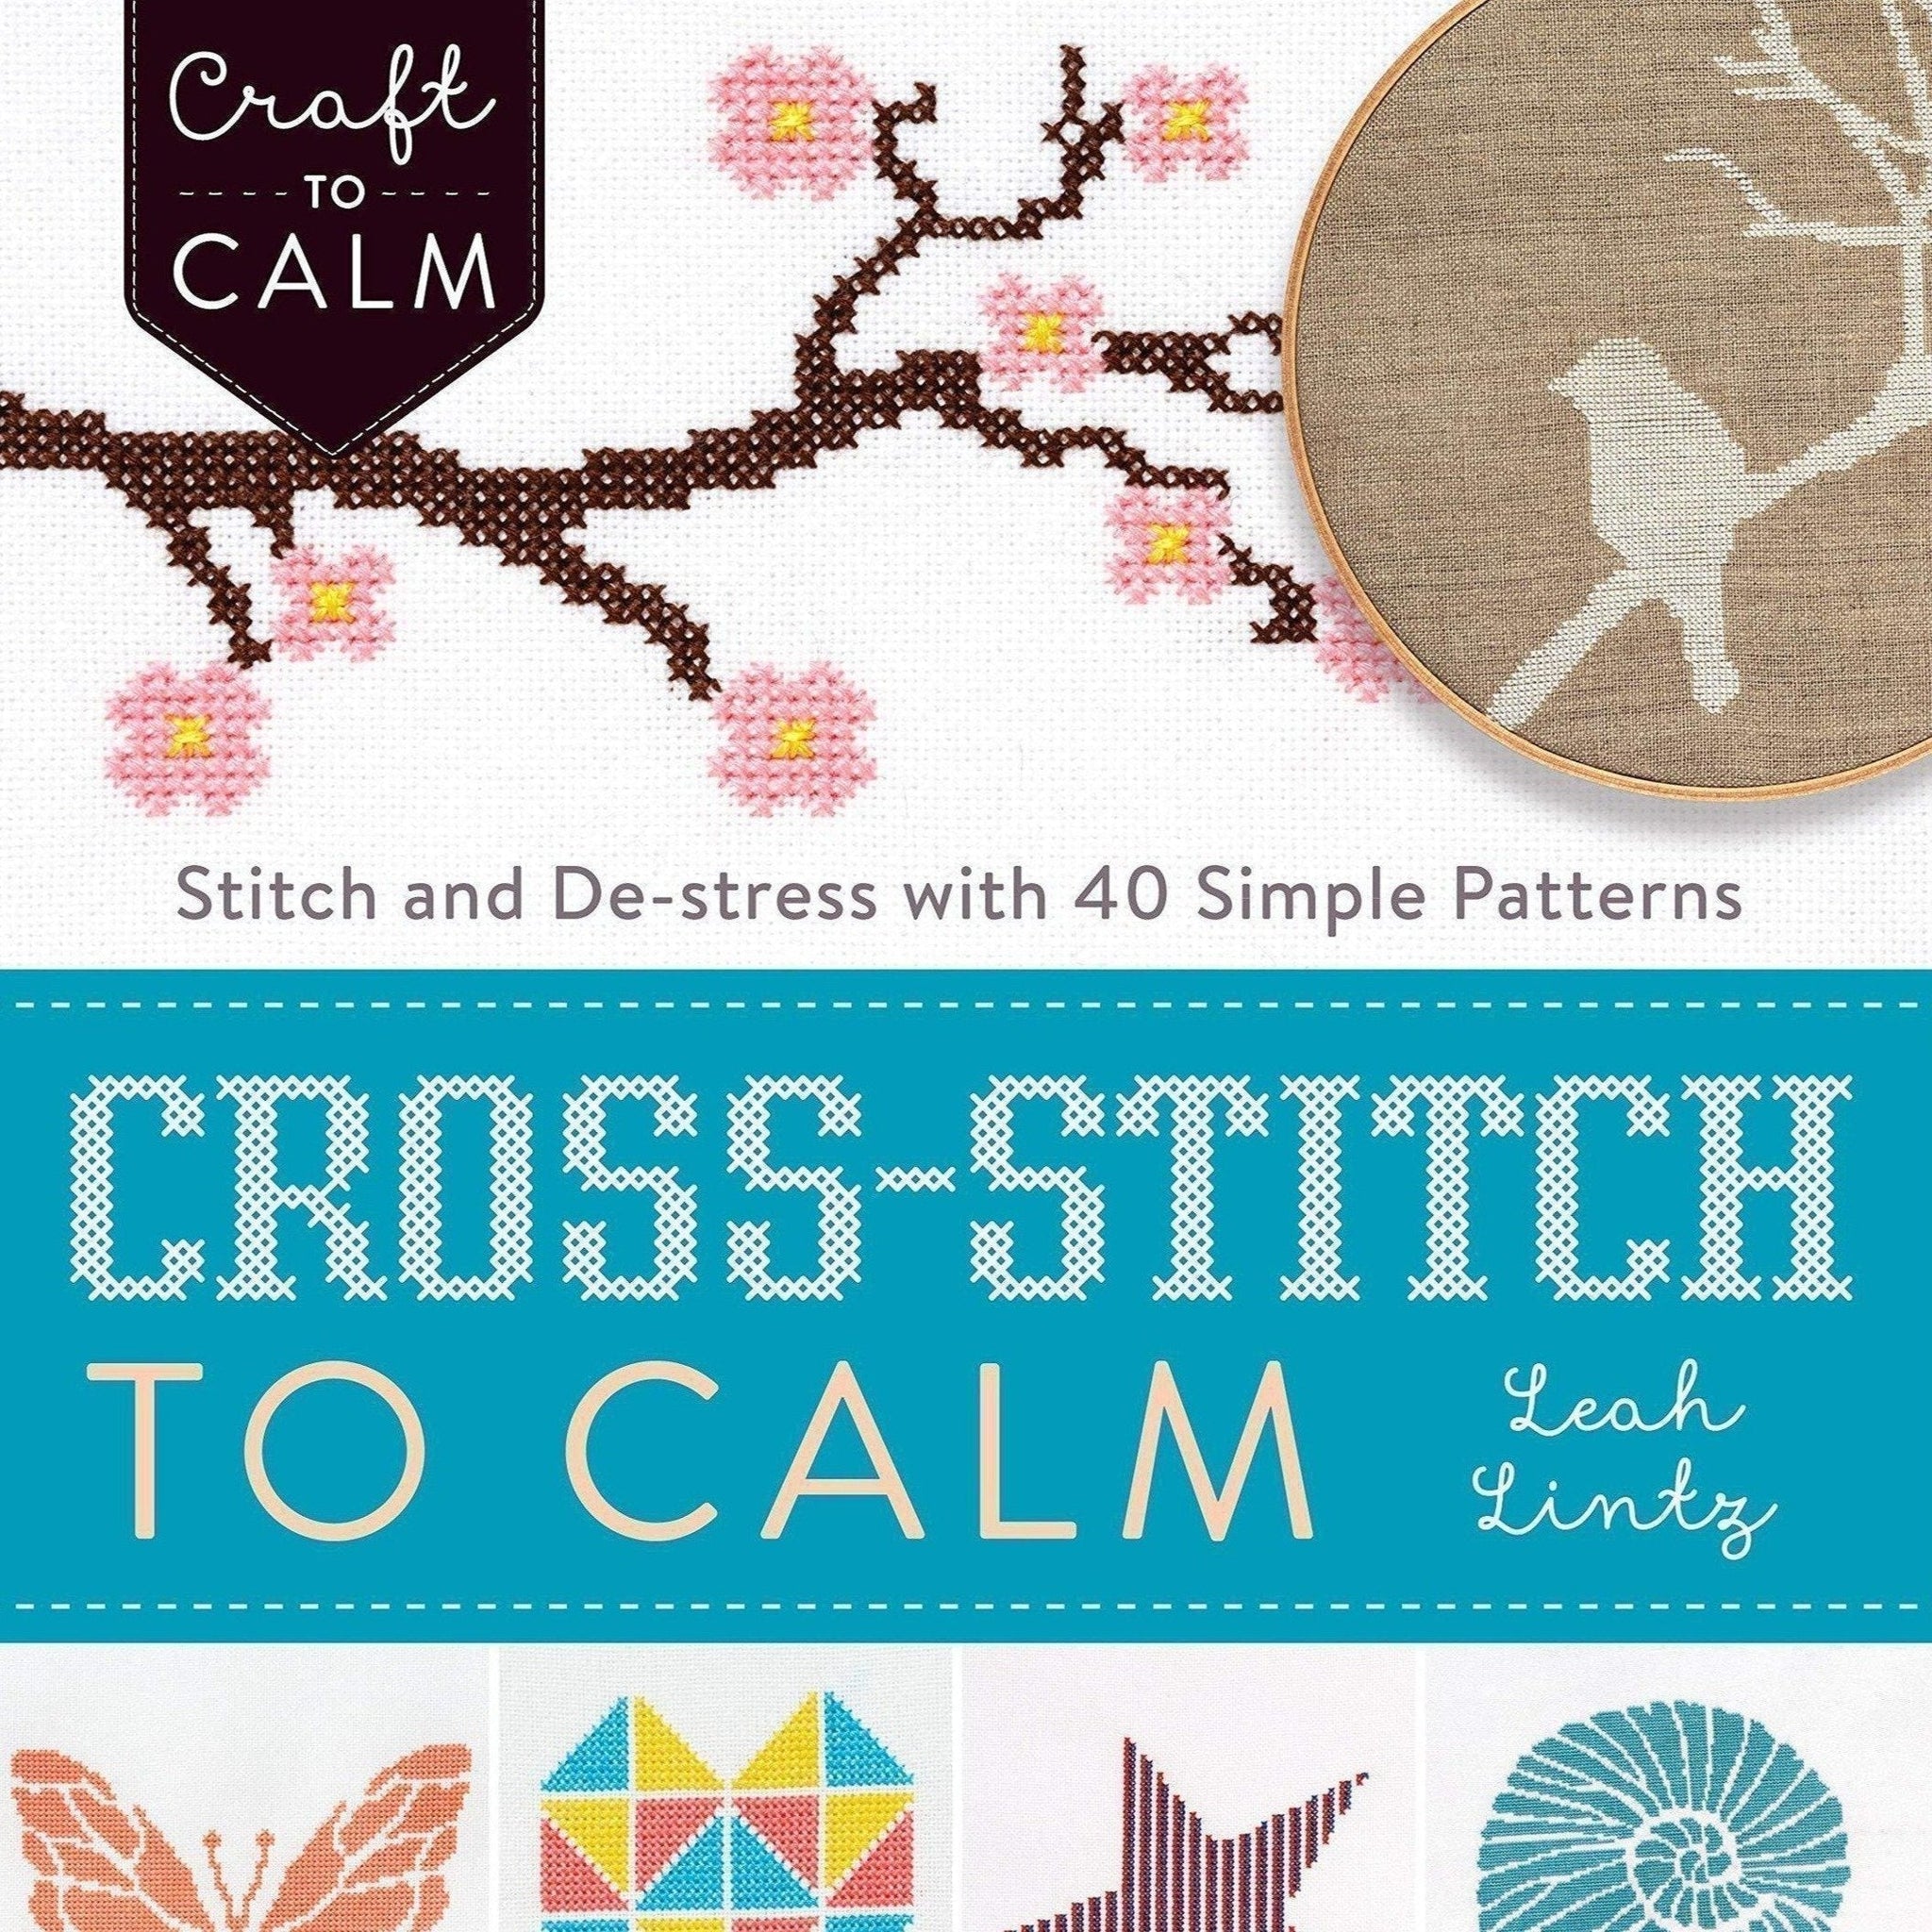 Interweave-Cross-Stitch to Calm-book-gather here online